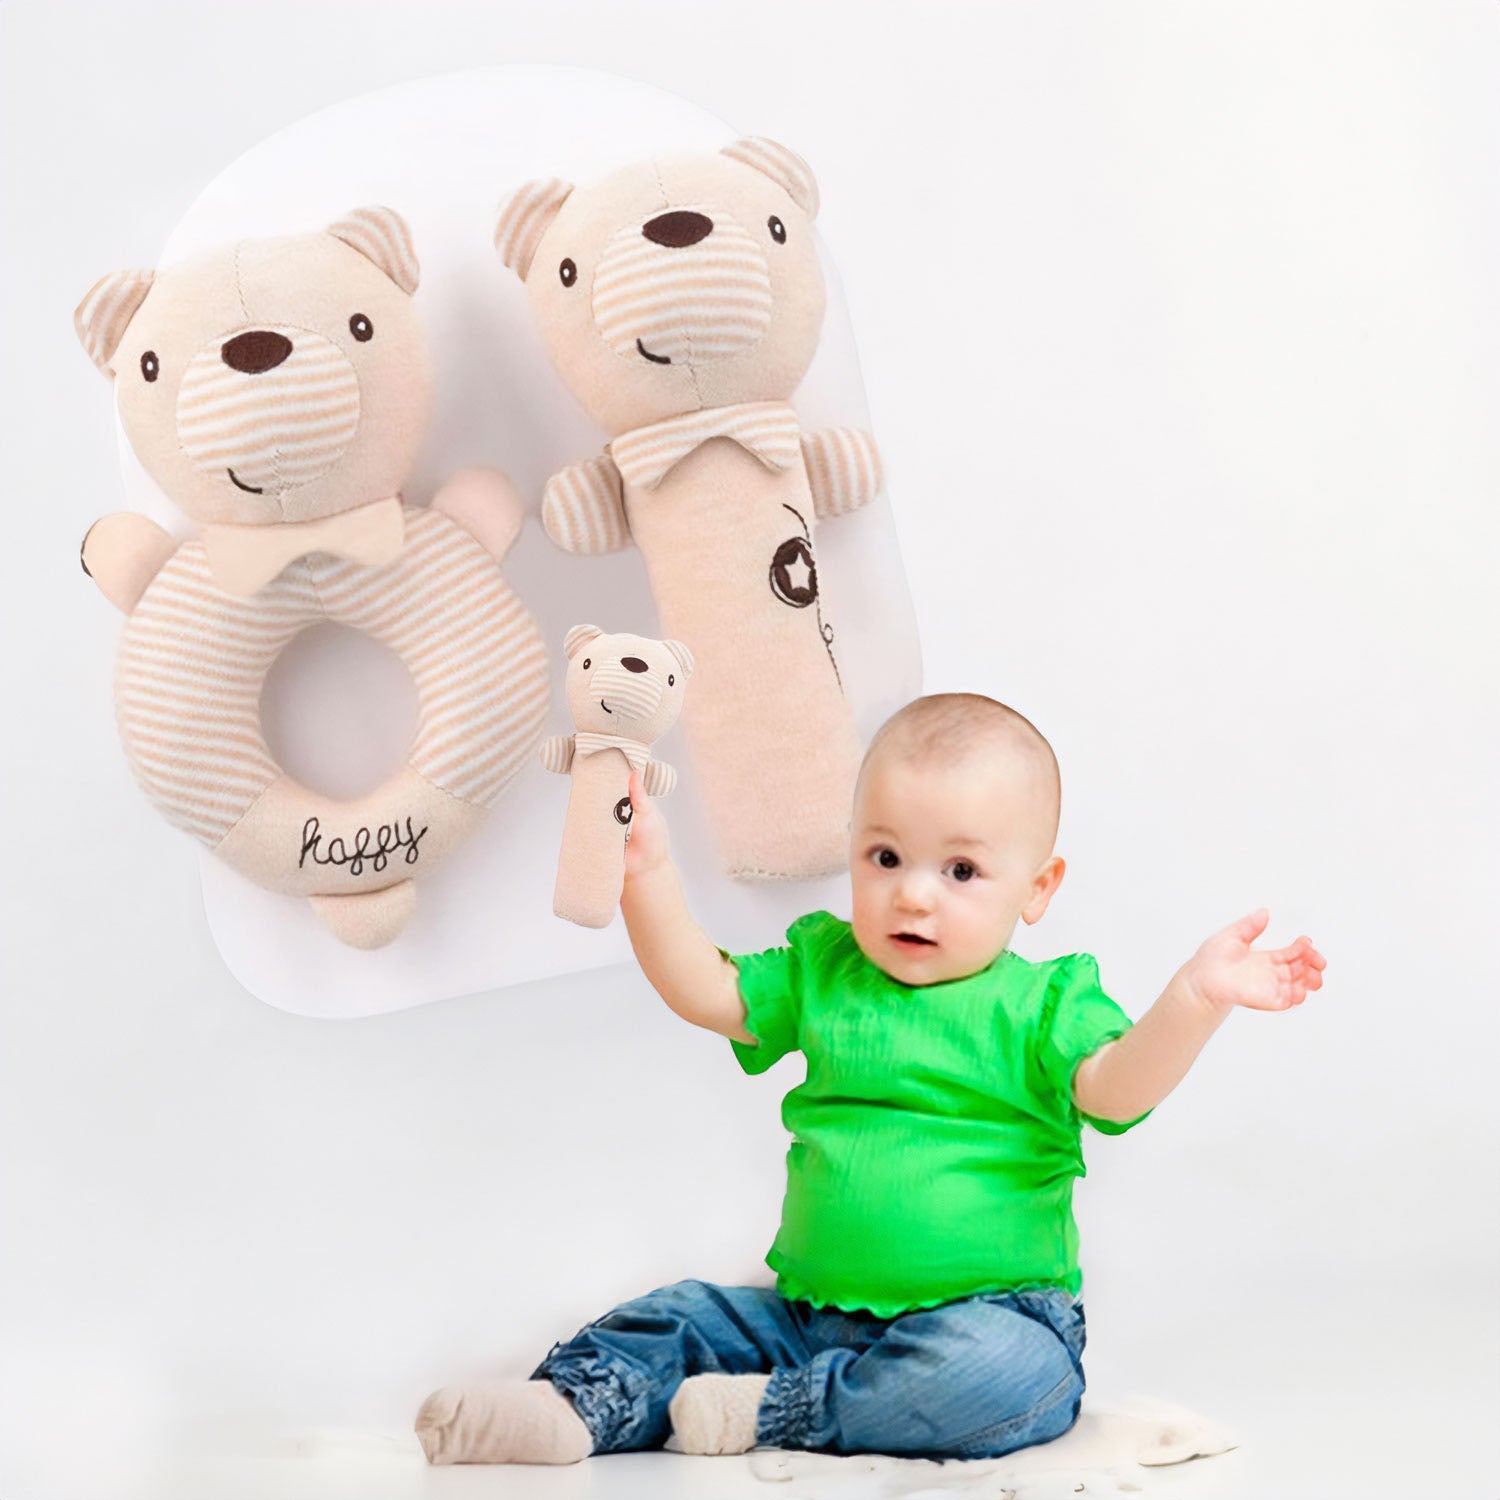 Baby Moo Snuggly Bear 2 Pack Squeaker Handheld Rattle Toy - Beige